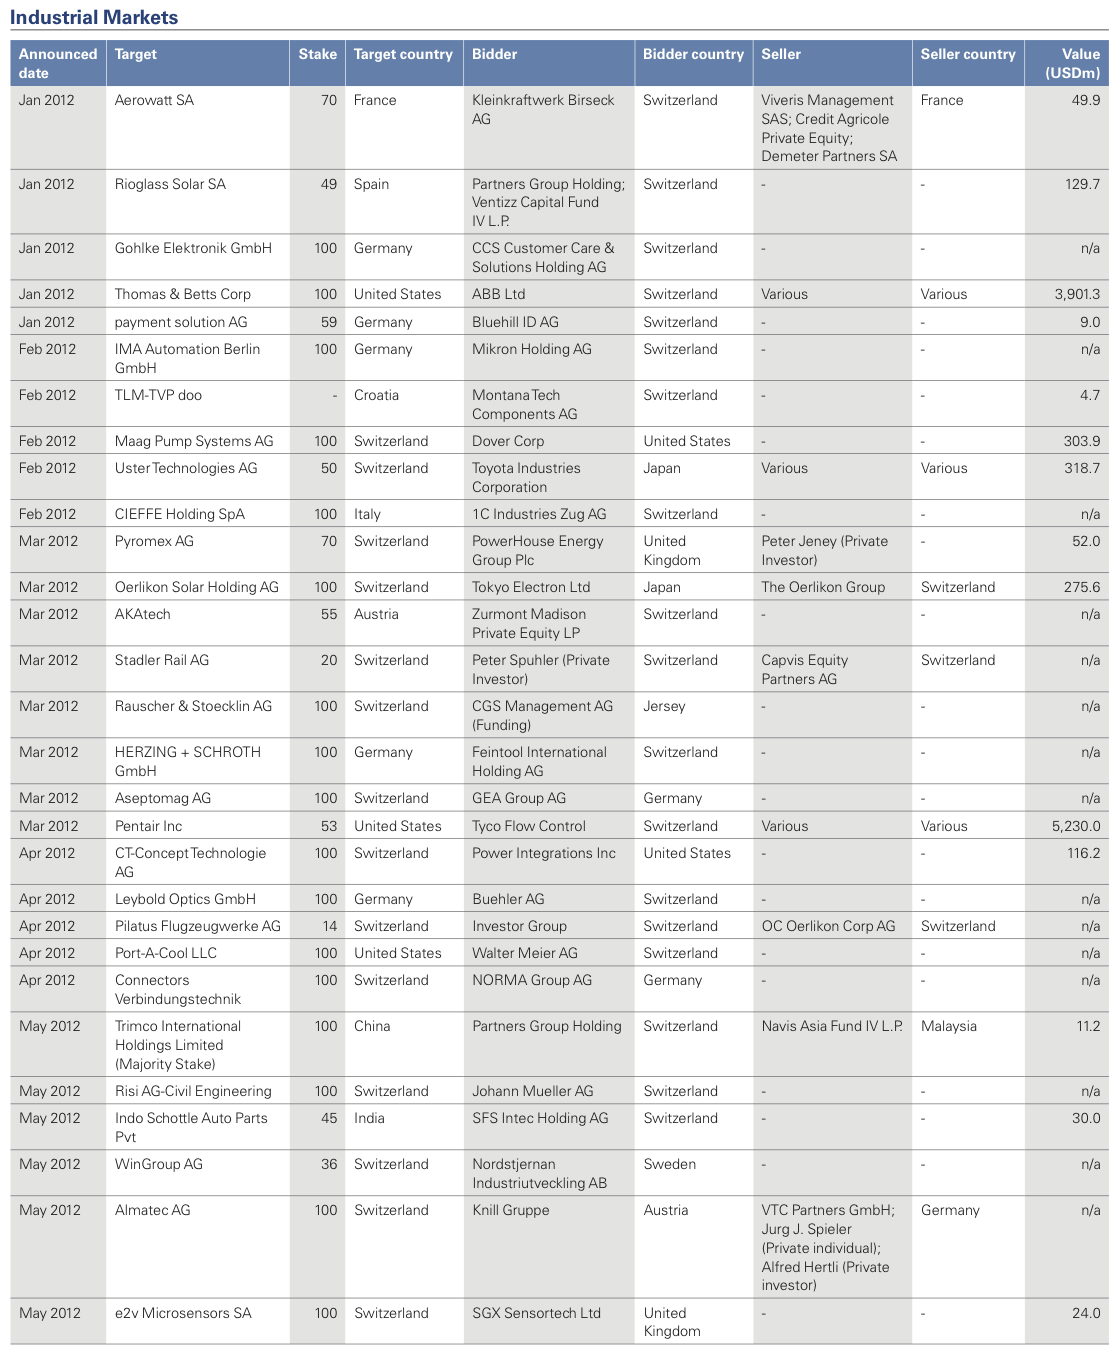 Figure 23: List of 2012 Swiss M&A Transactions